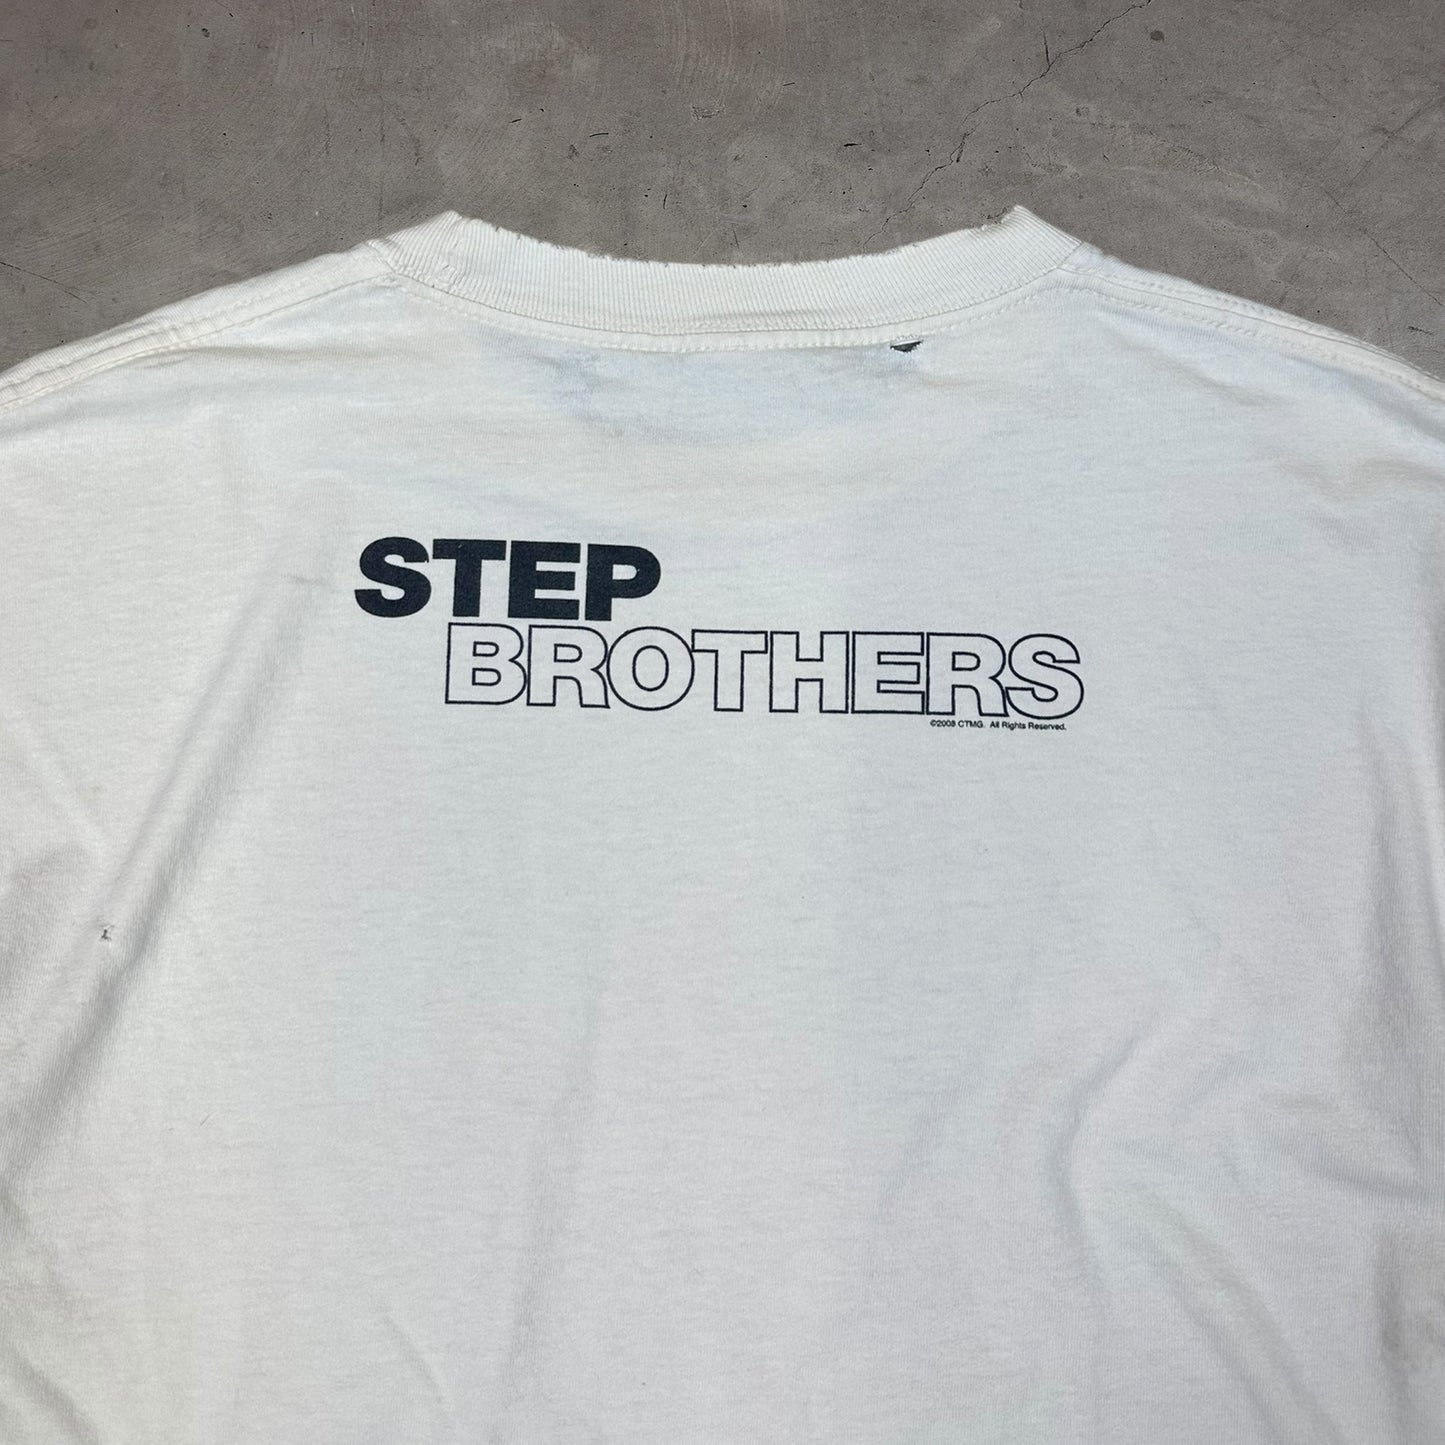 2008 "STEP BROTHERS" MOVIE PROMO TEE / LARGE